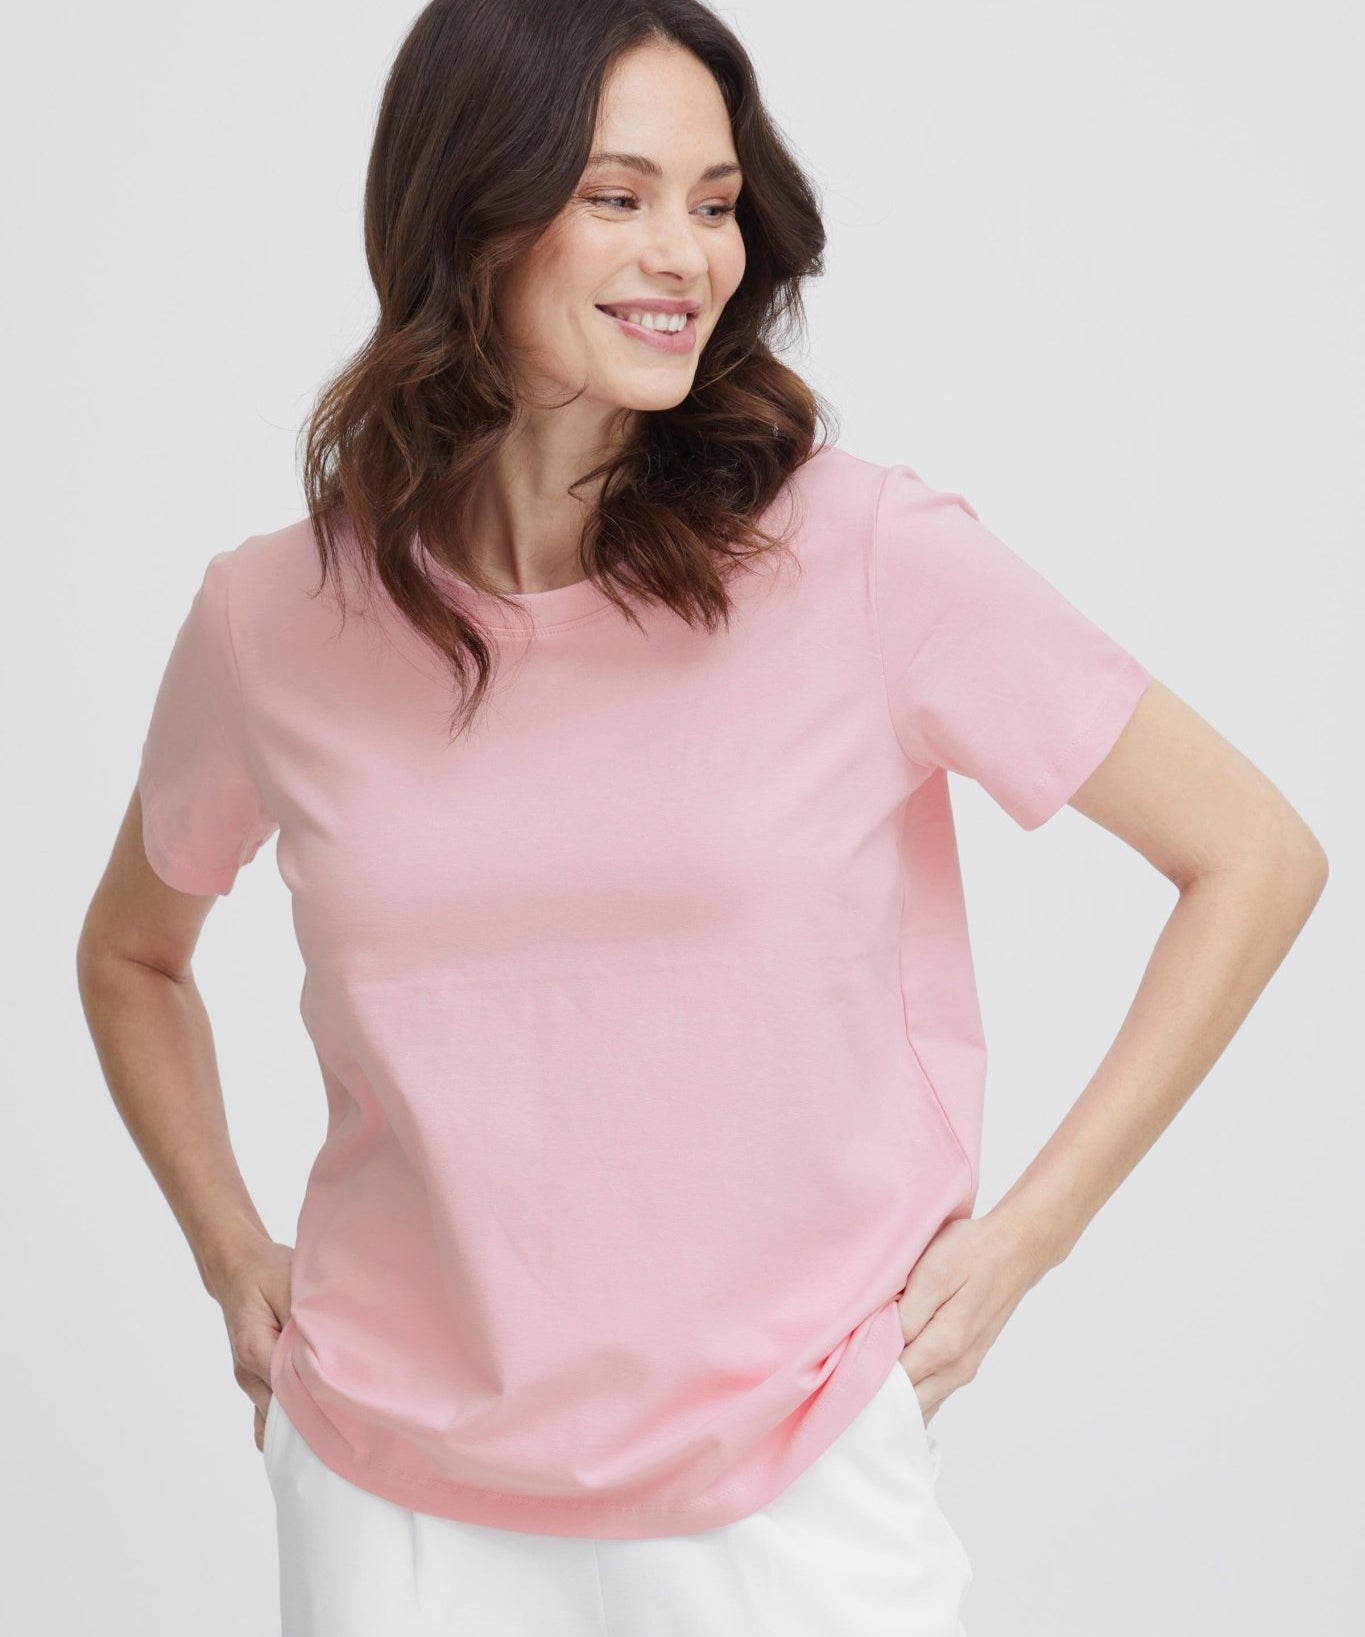 Zashoulder T-shirt by Fransa - pink frosting - Blue Sky Fashions & Lingerie